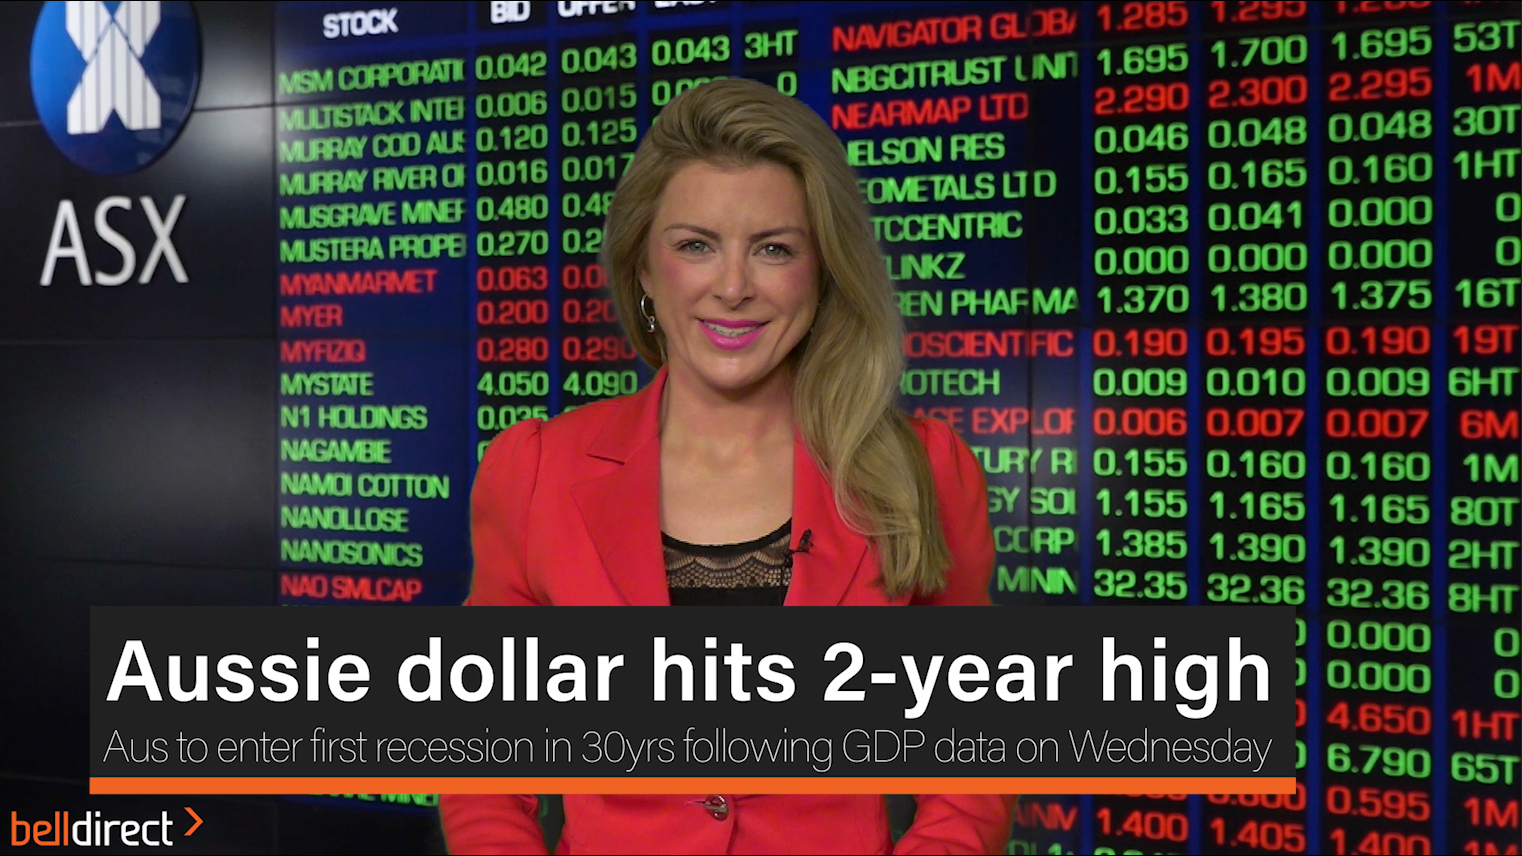 Aussie dollar hits 2-year high